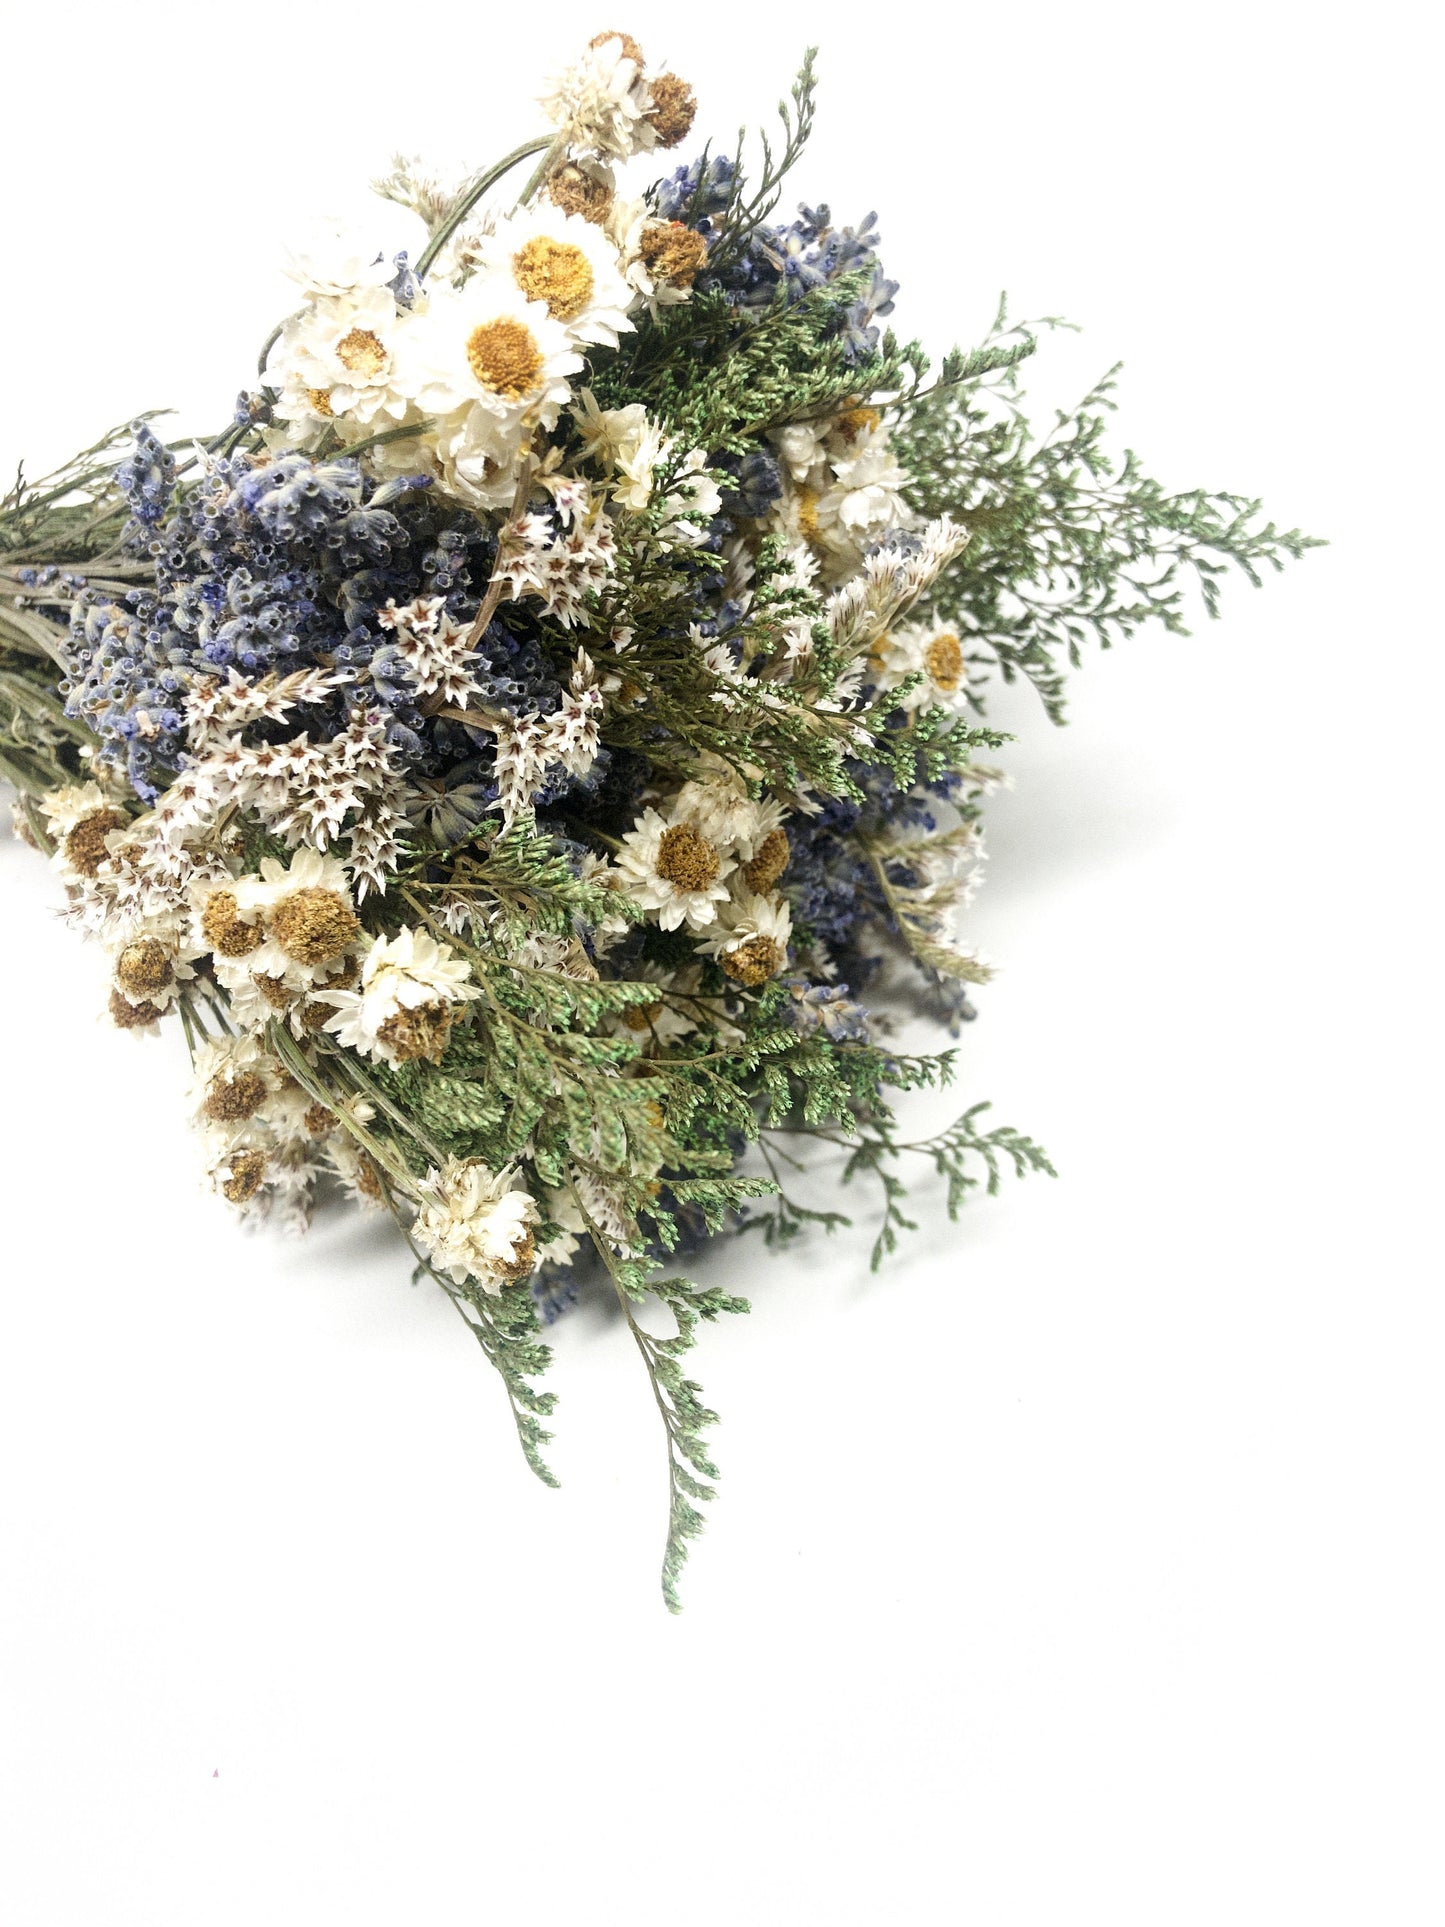 Wedding Bouquet, Fall Decor, Throw bouquet, Lavender, Ammobium, Green Caspia, German Statice, House Decoration, Dried Flowers, Natural